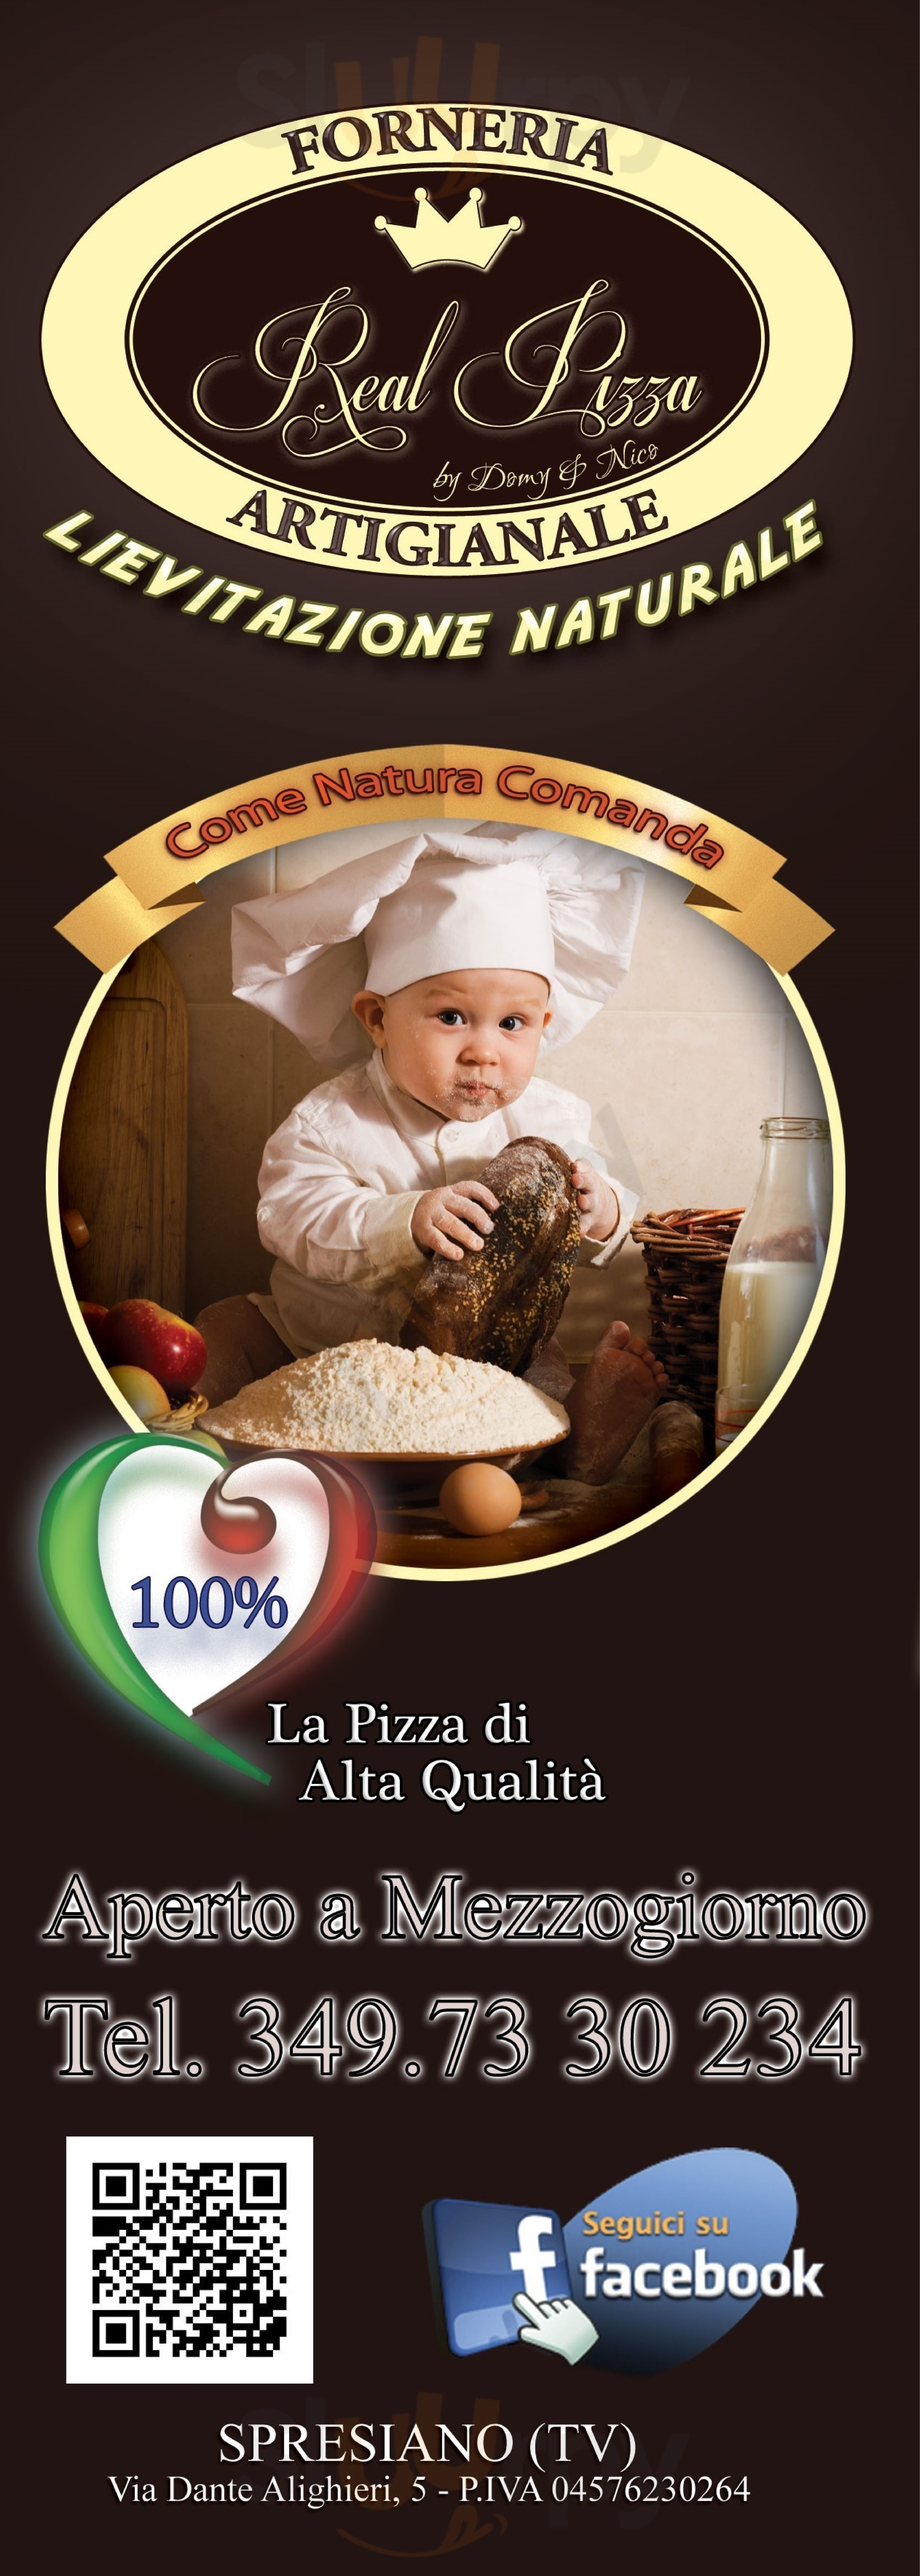 Forneria Pizzeria Real Pizza Spresiano menù 1 pagina